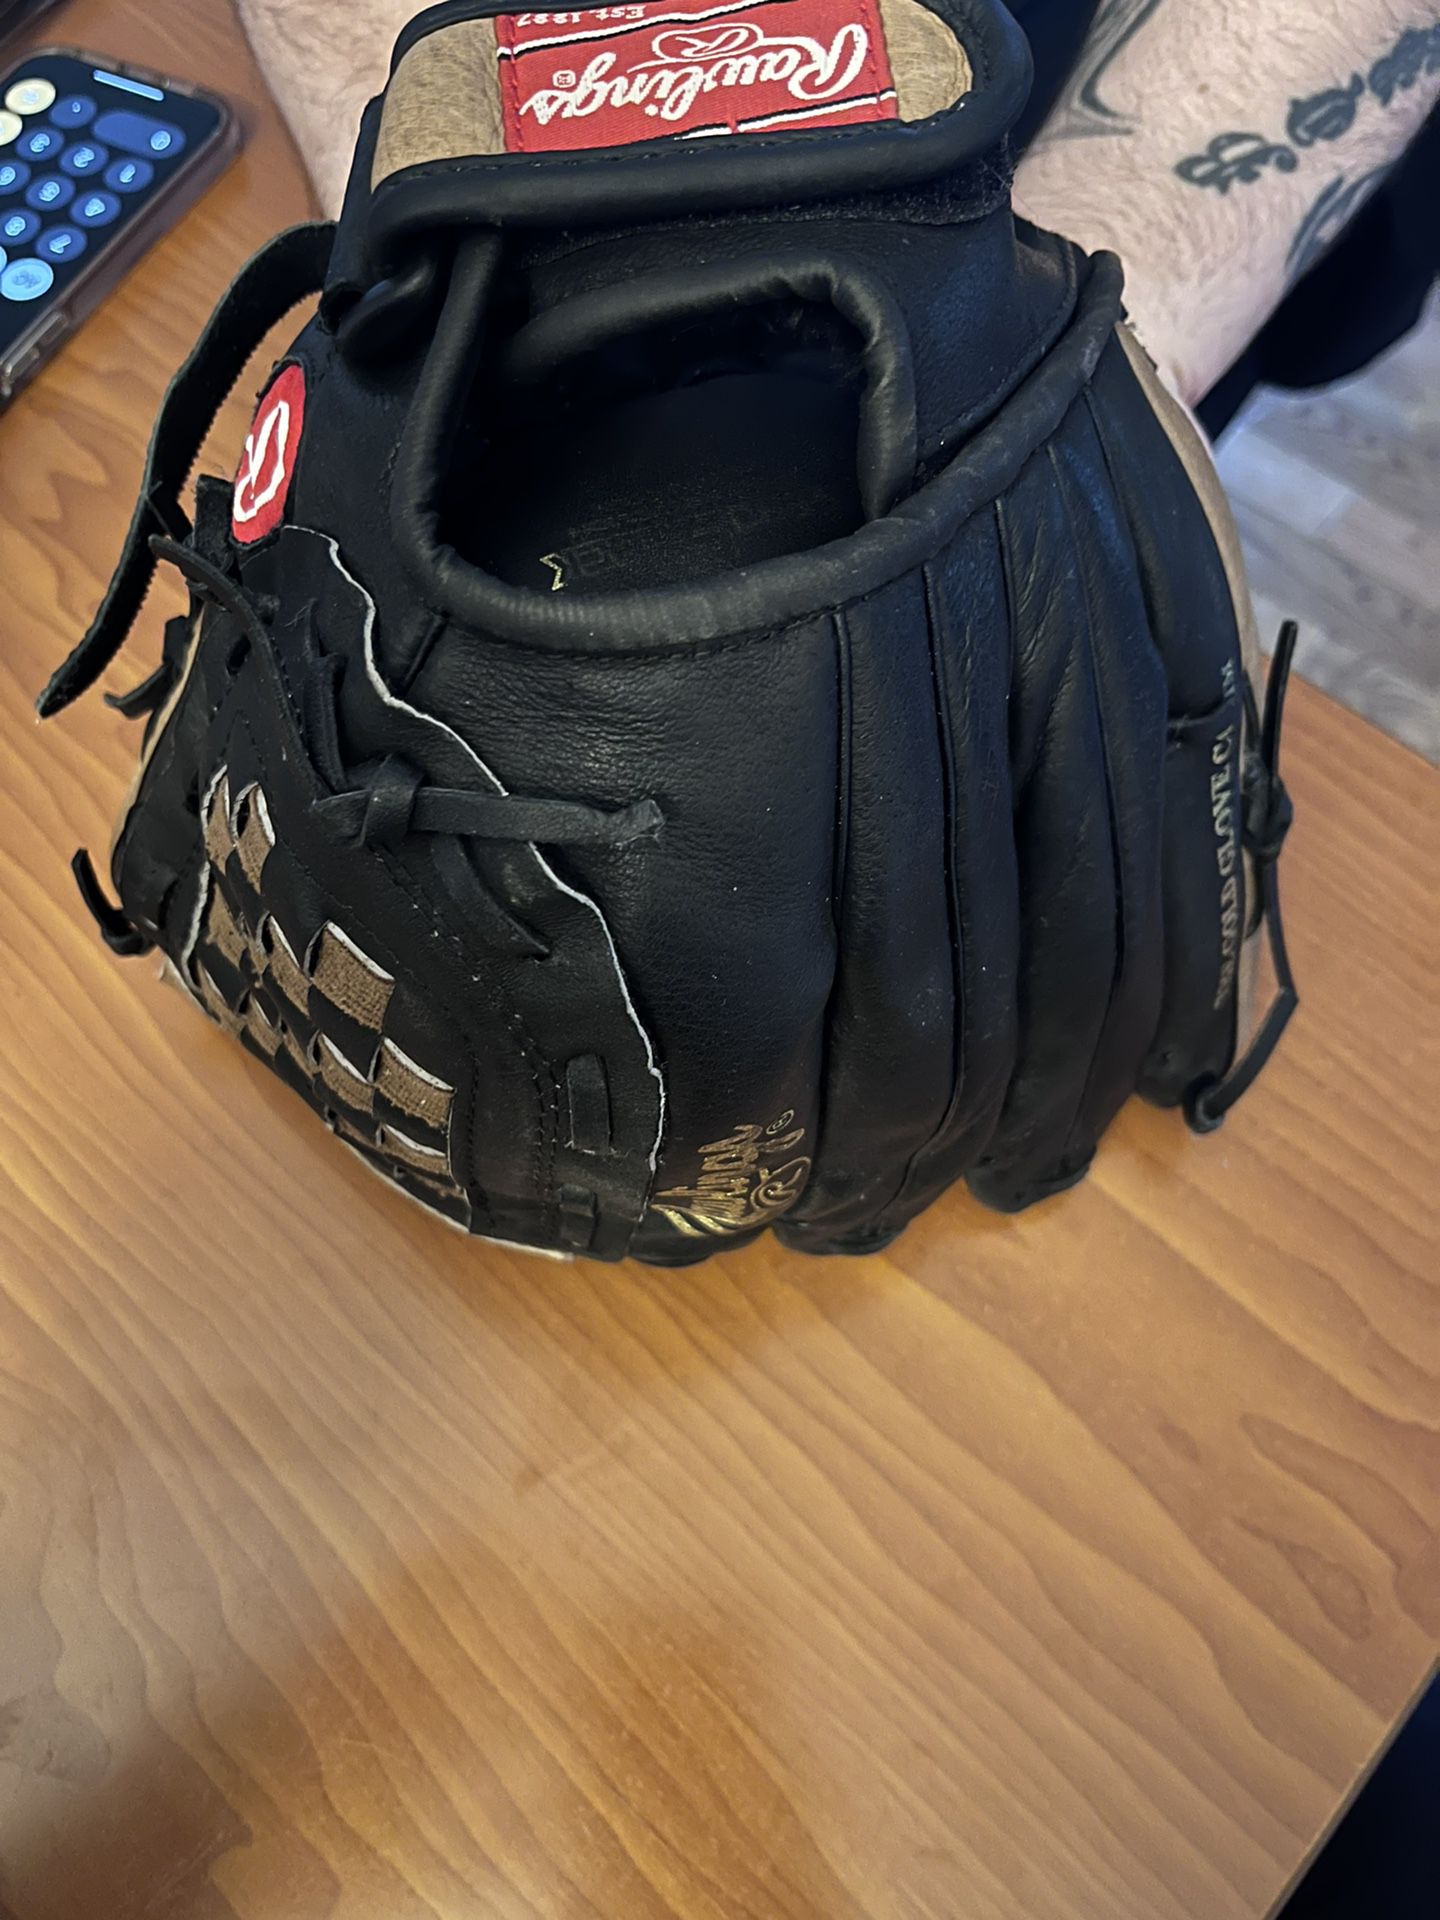 Youth Baseball Helmet And Glove